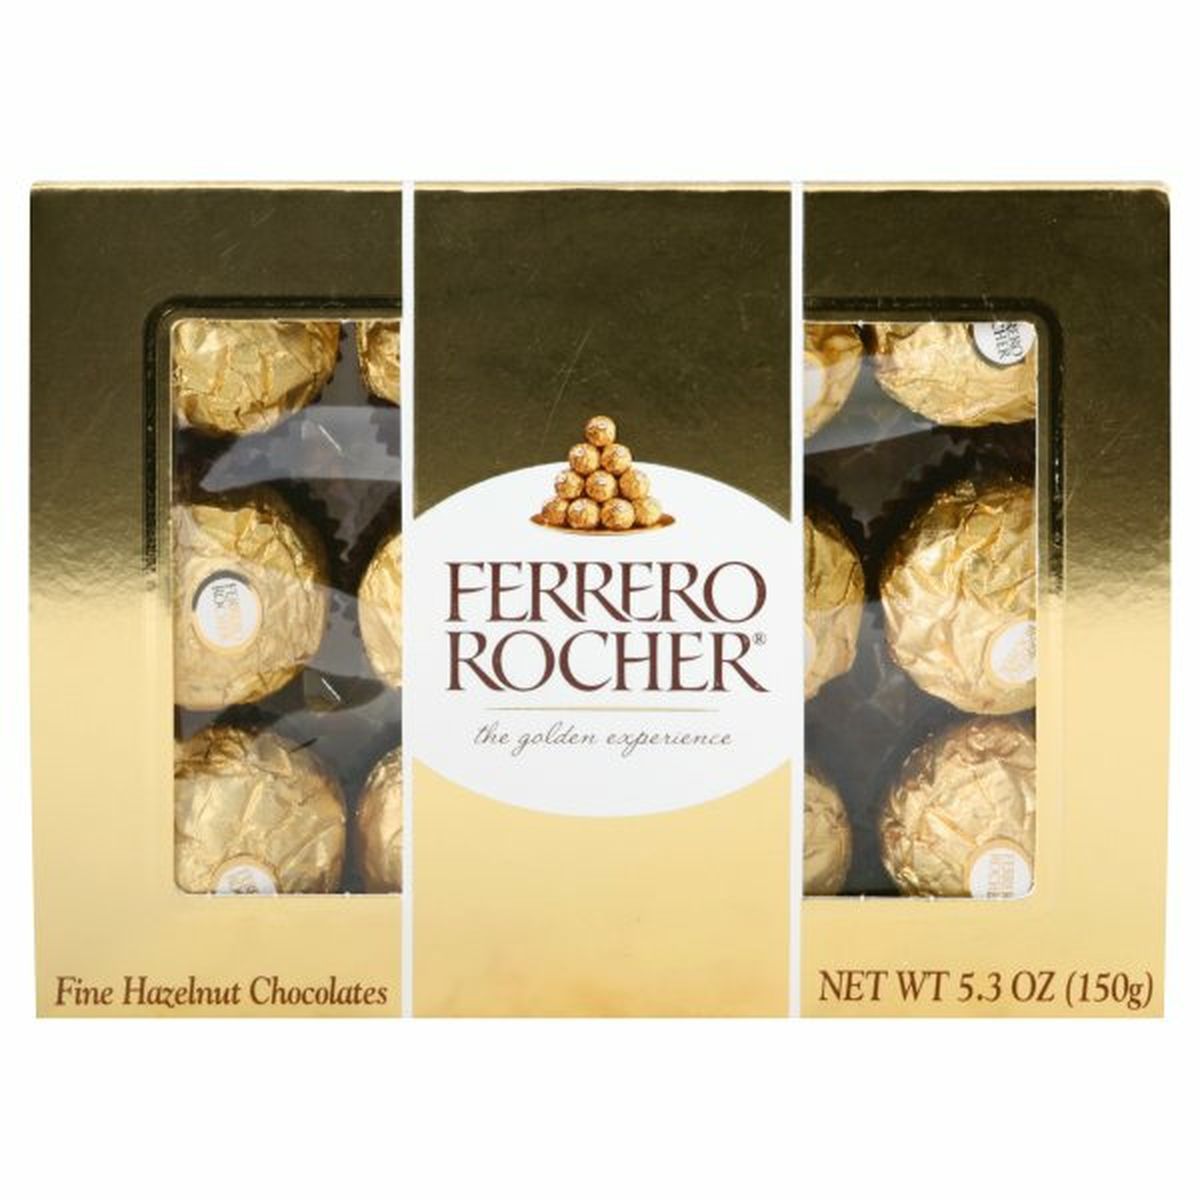 Calories in Ferrero Rocher Fine Hazelnut Chocolates